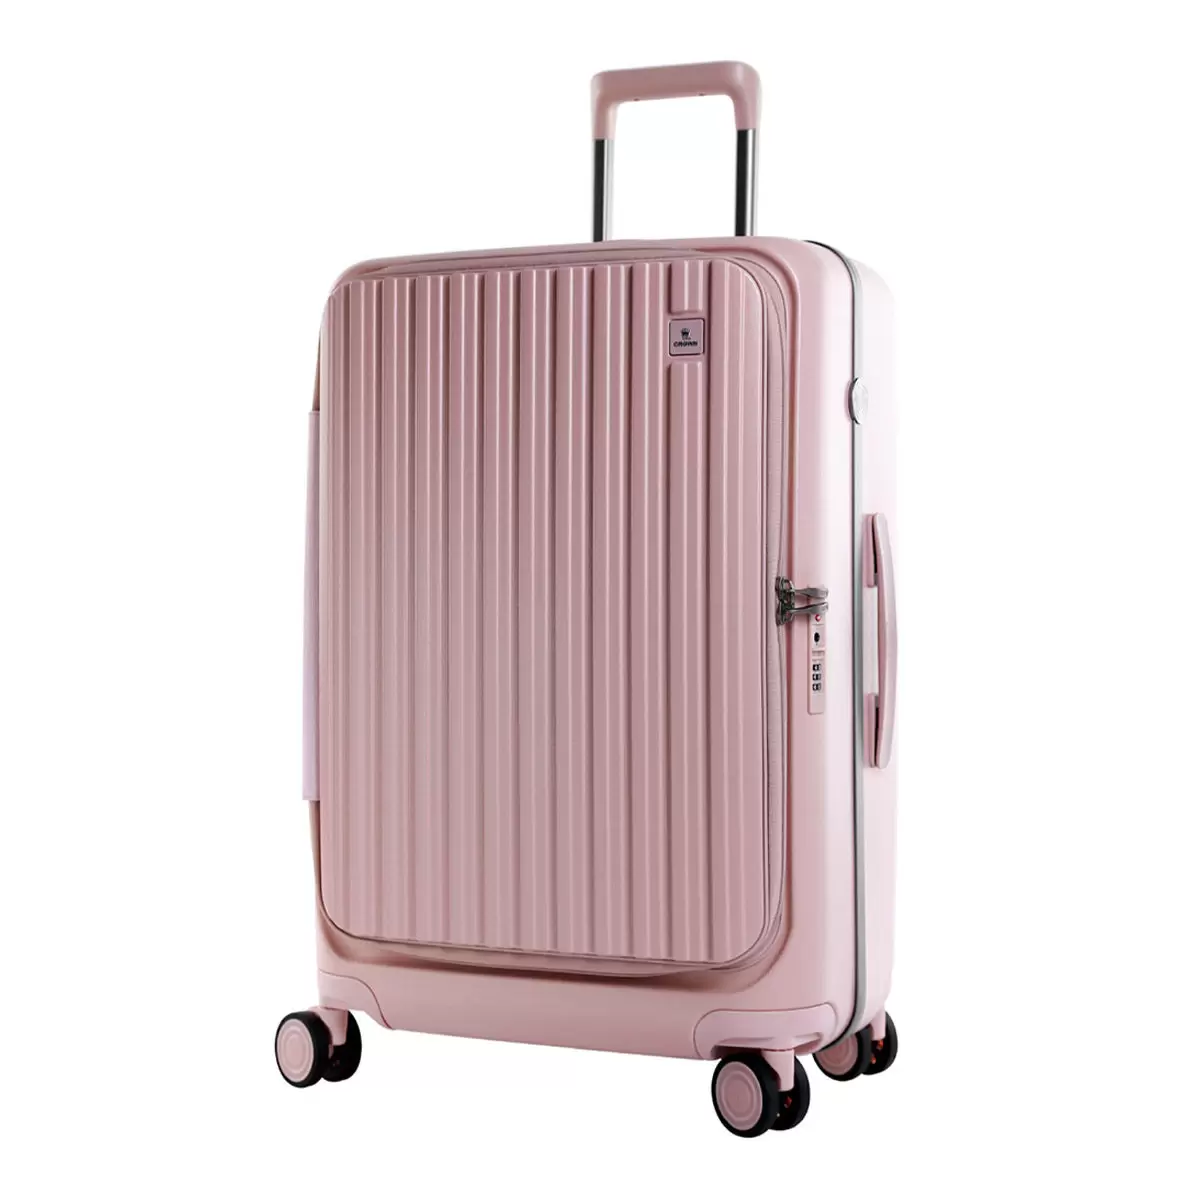 CROWN BOXY 26吋 鋁框拉鍊前開框架行李箱 粉色